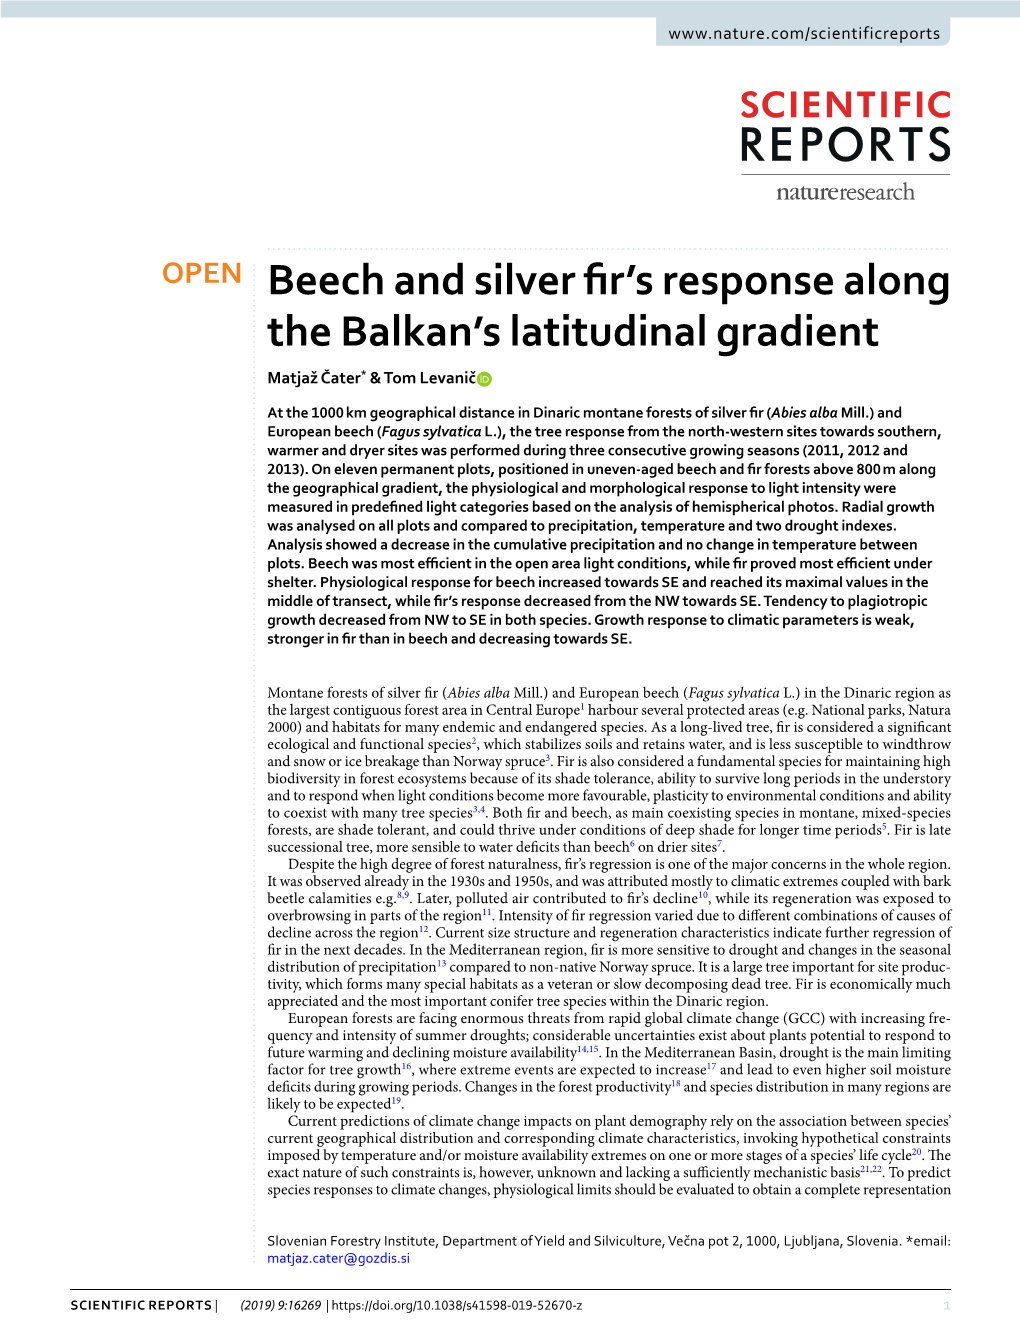 Beech and Silver Fir's Response Along the Balkan's Latitudinal Gradient